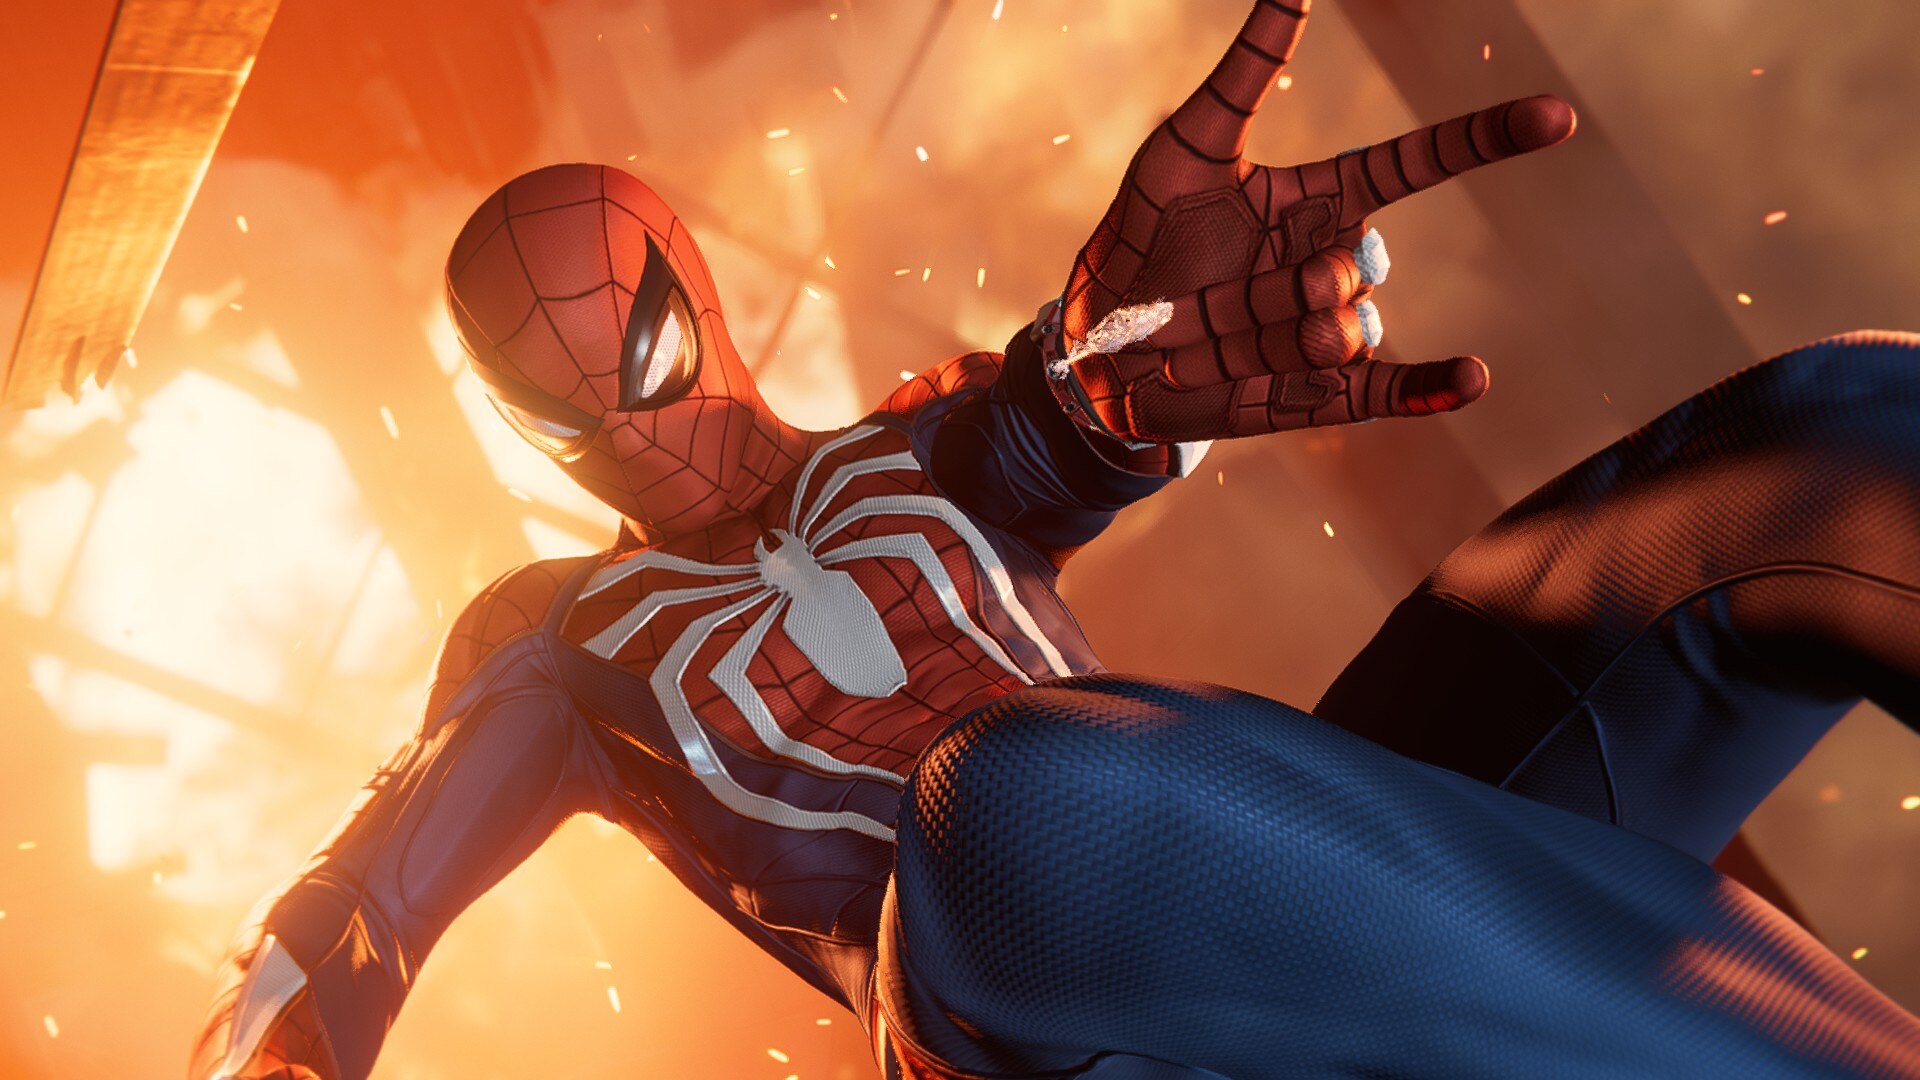 General 1920x1080 Spider-Man Spider-Man (2018) Marvel Comics bodysuit PlayStation explosion CGI superhero